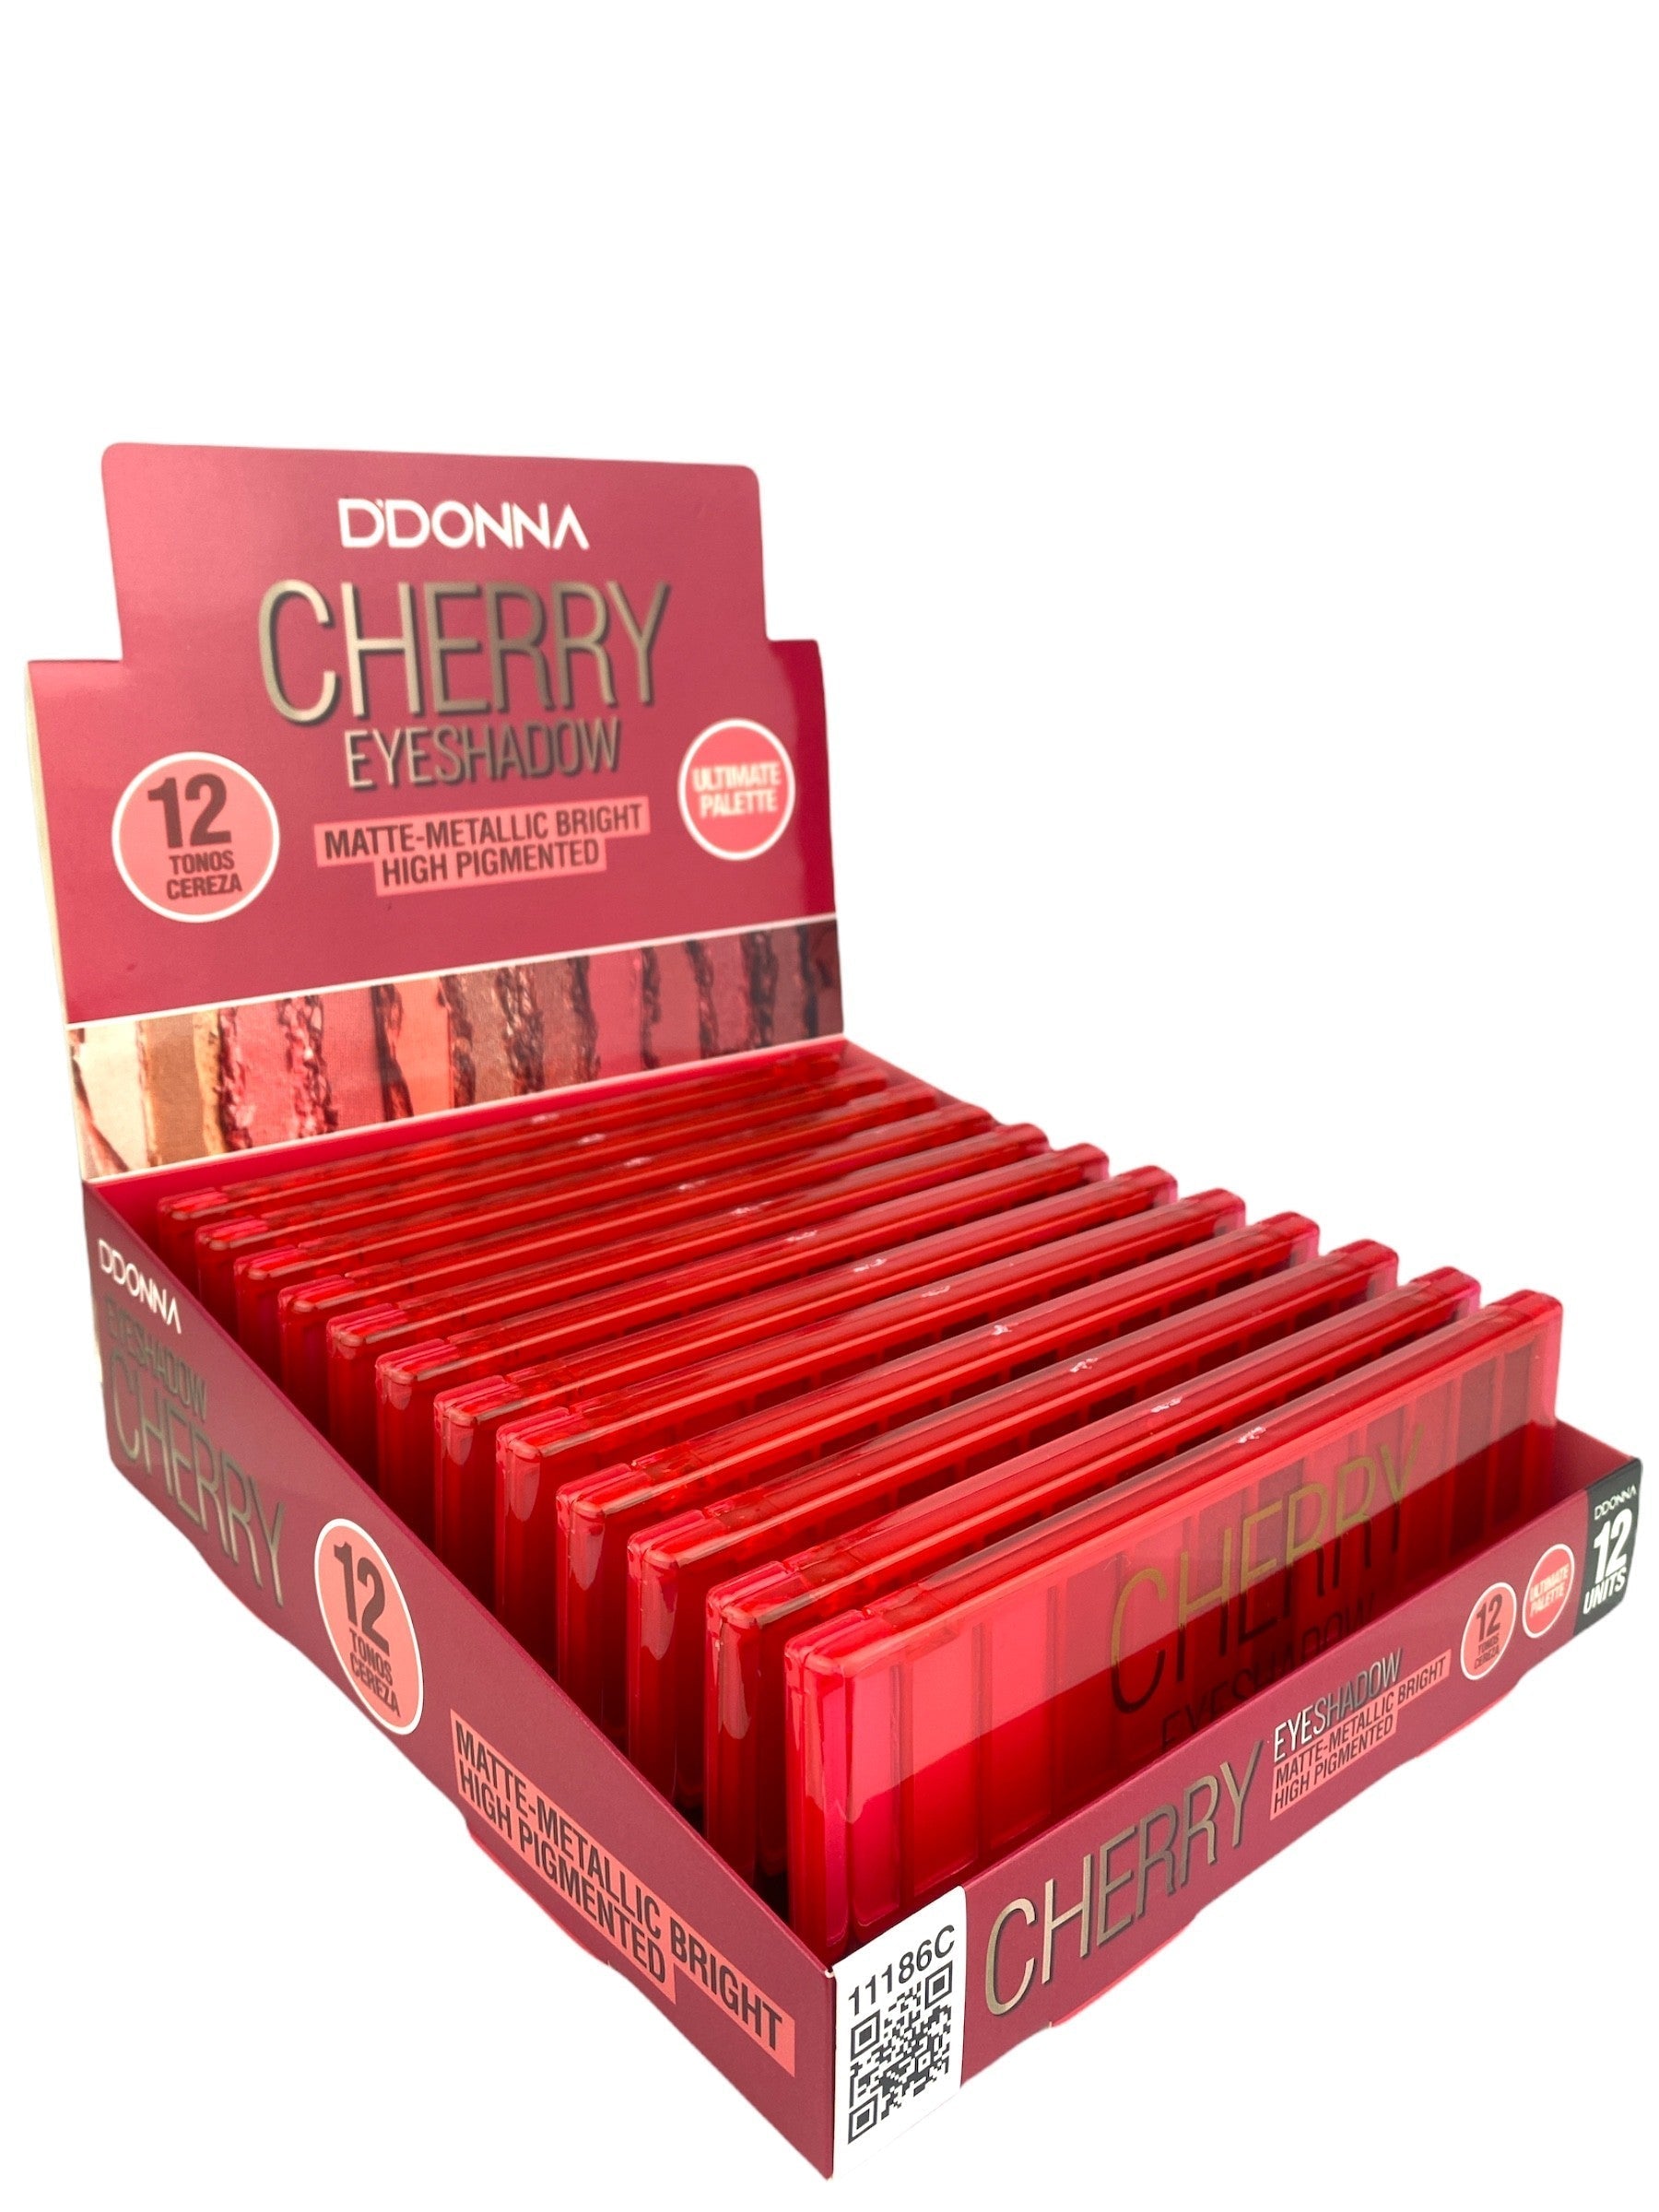 12 Minipalette de 12 -paquete de cereza "alto pigmentado" - D Donna